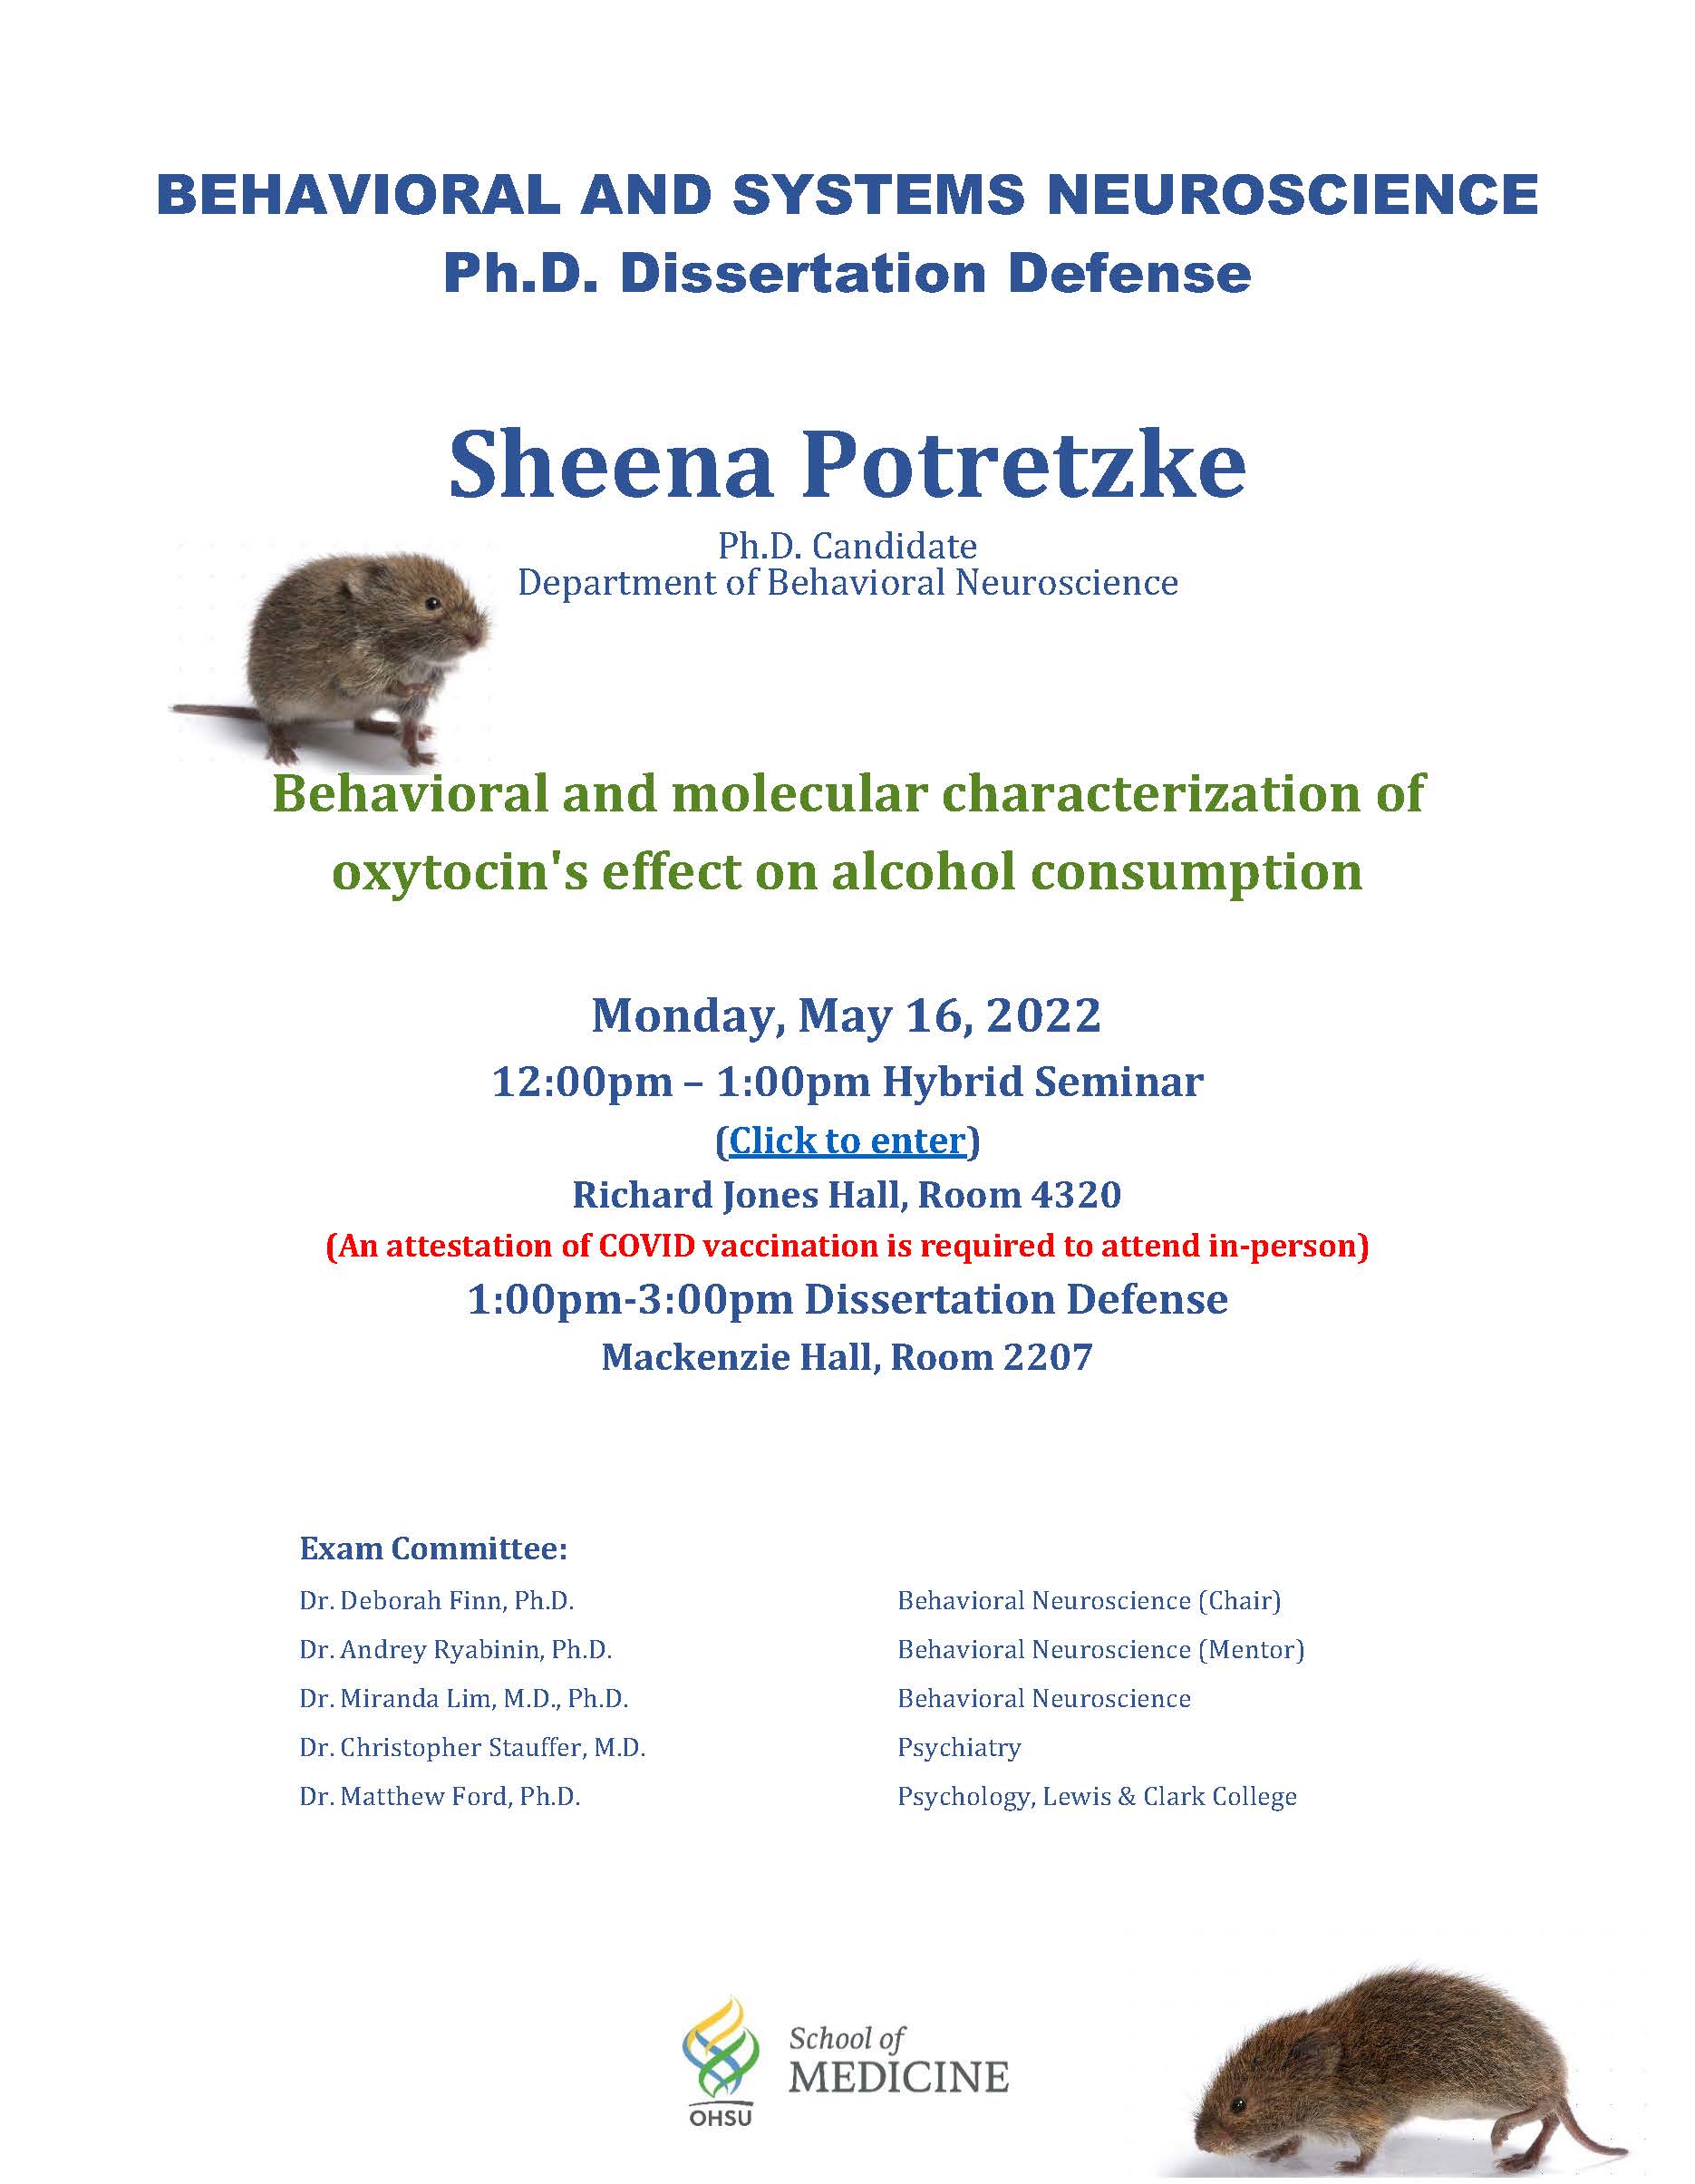 Sheena Potretzke Ph.D. Dissertation Defense Flyer